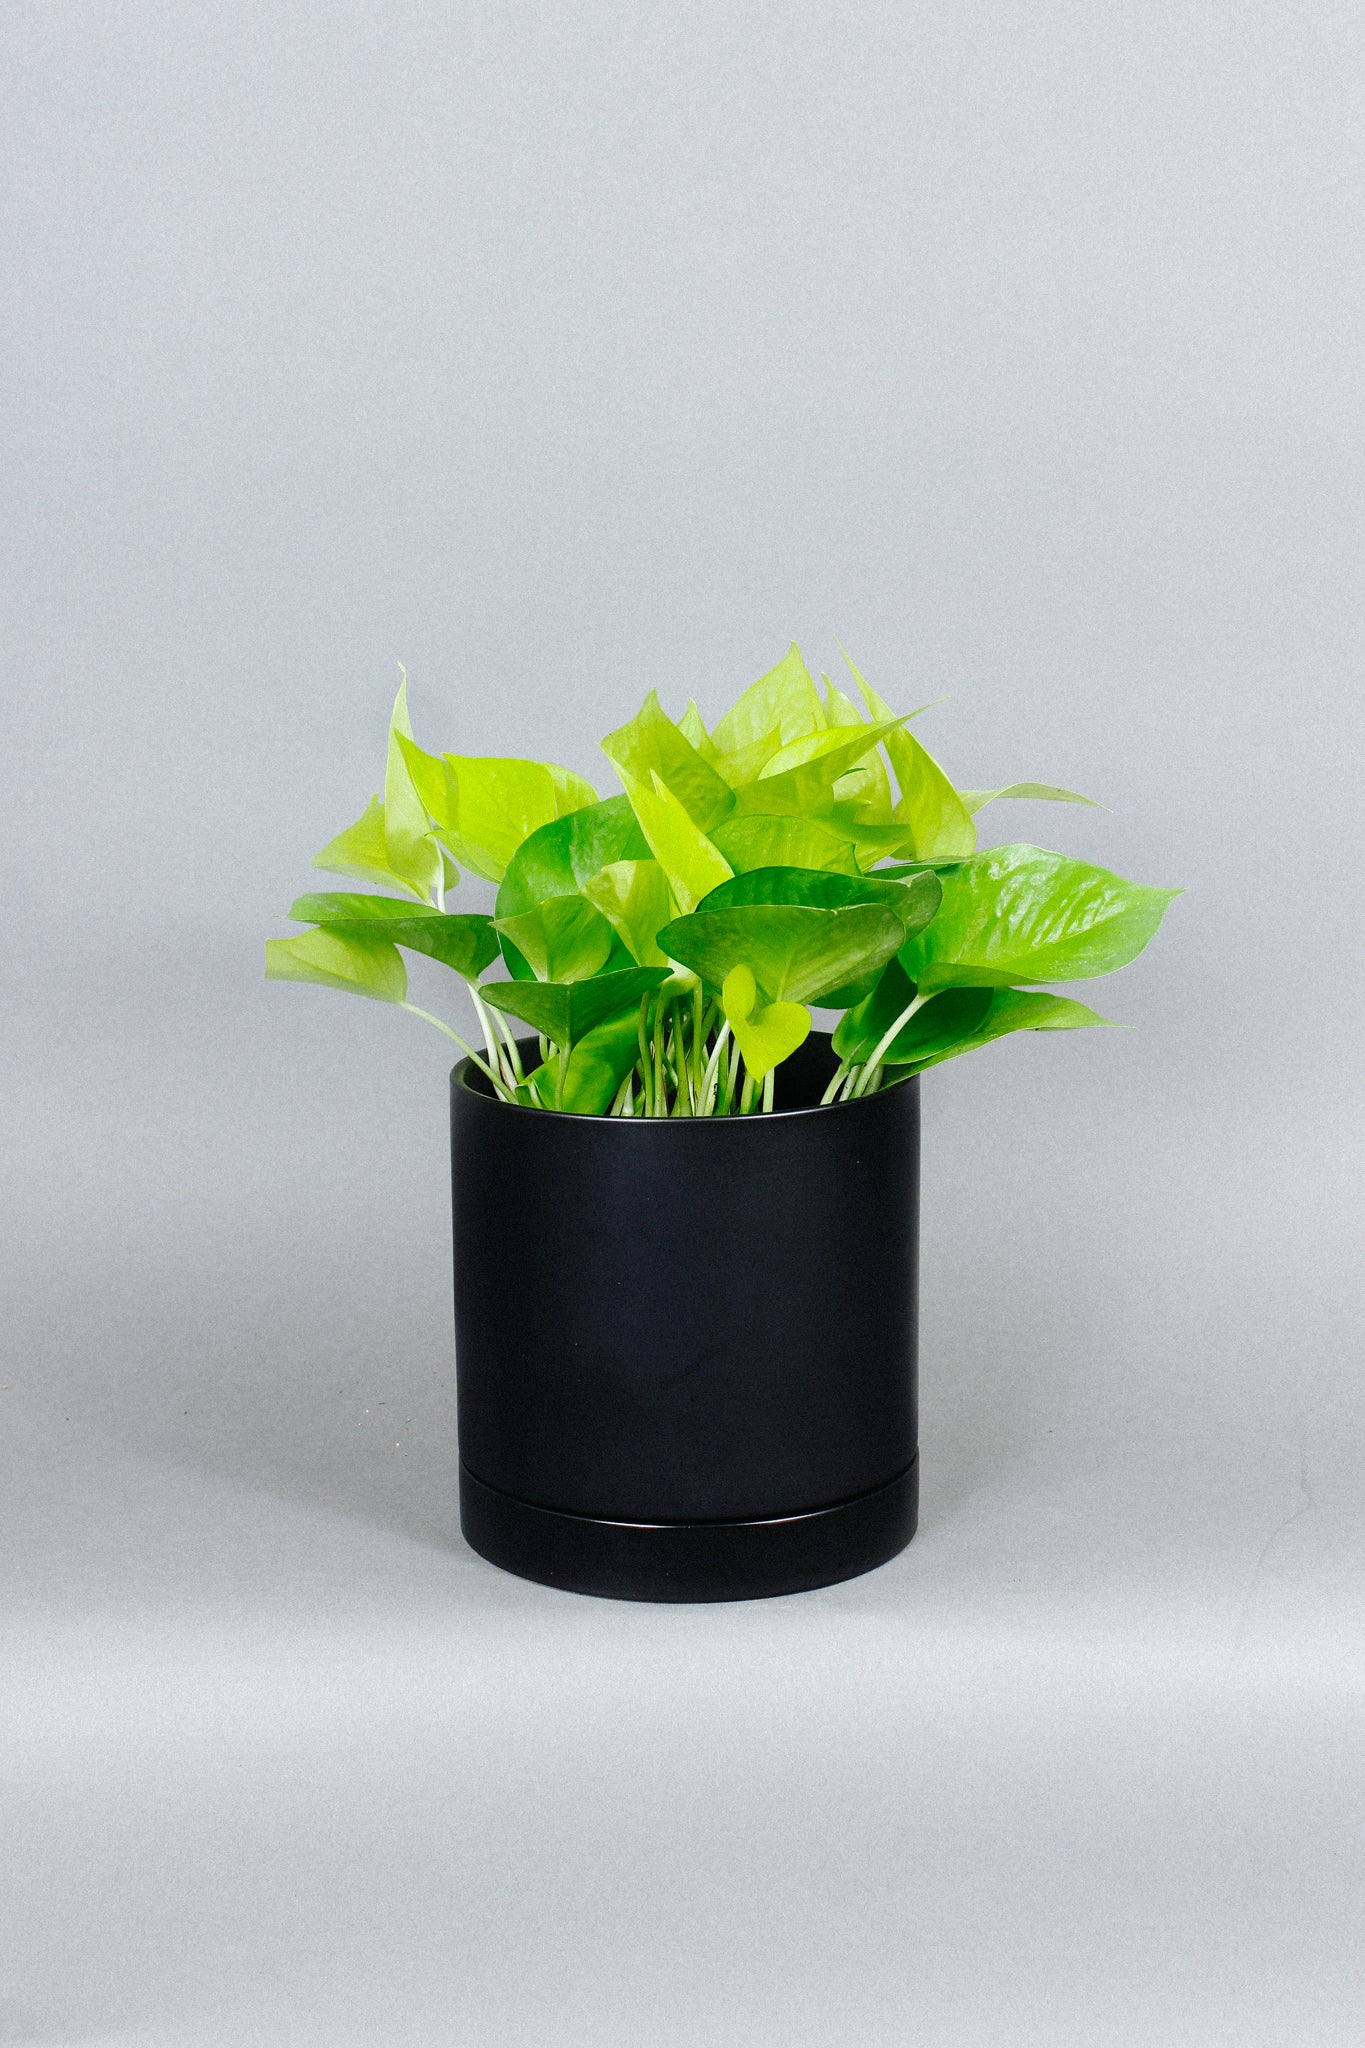 A Neon Pothos plant perks its leaves over a Matte Black planter.